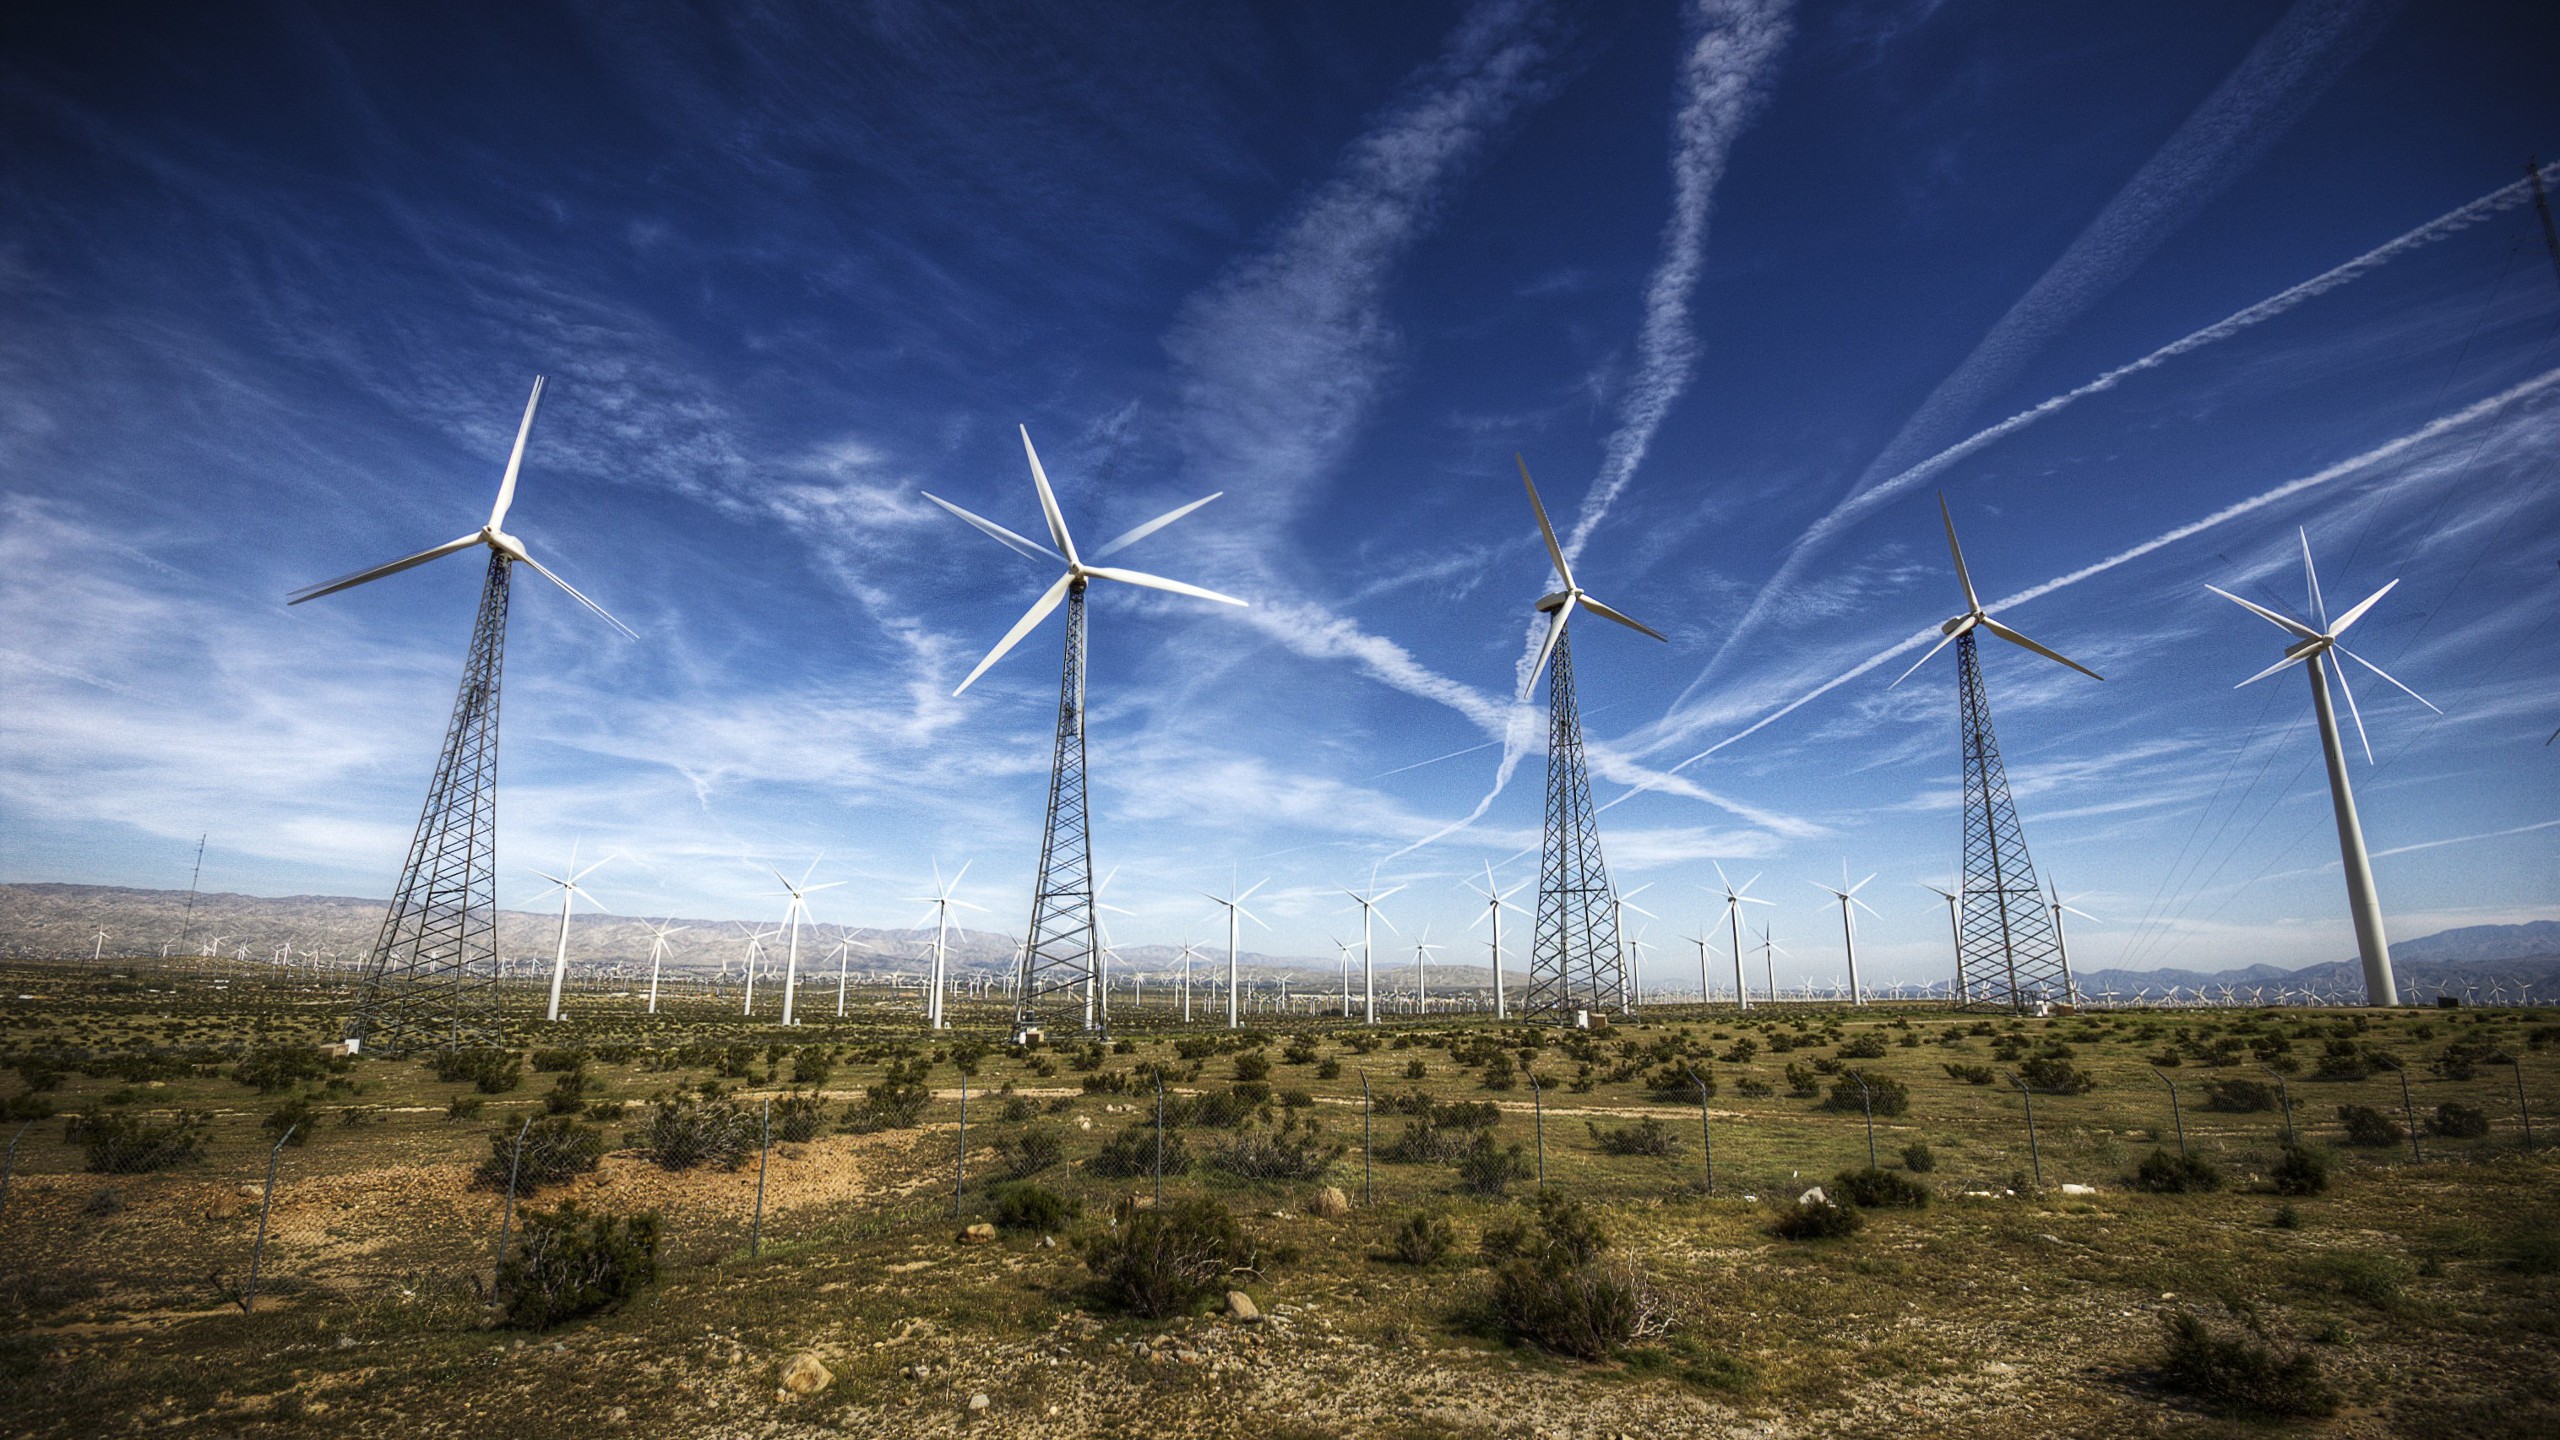 General 2560x1440 wind turbine clouds wind farm plains landscape outdoors sky technology